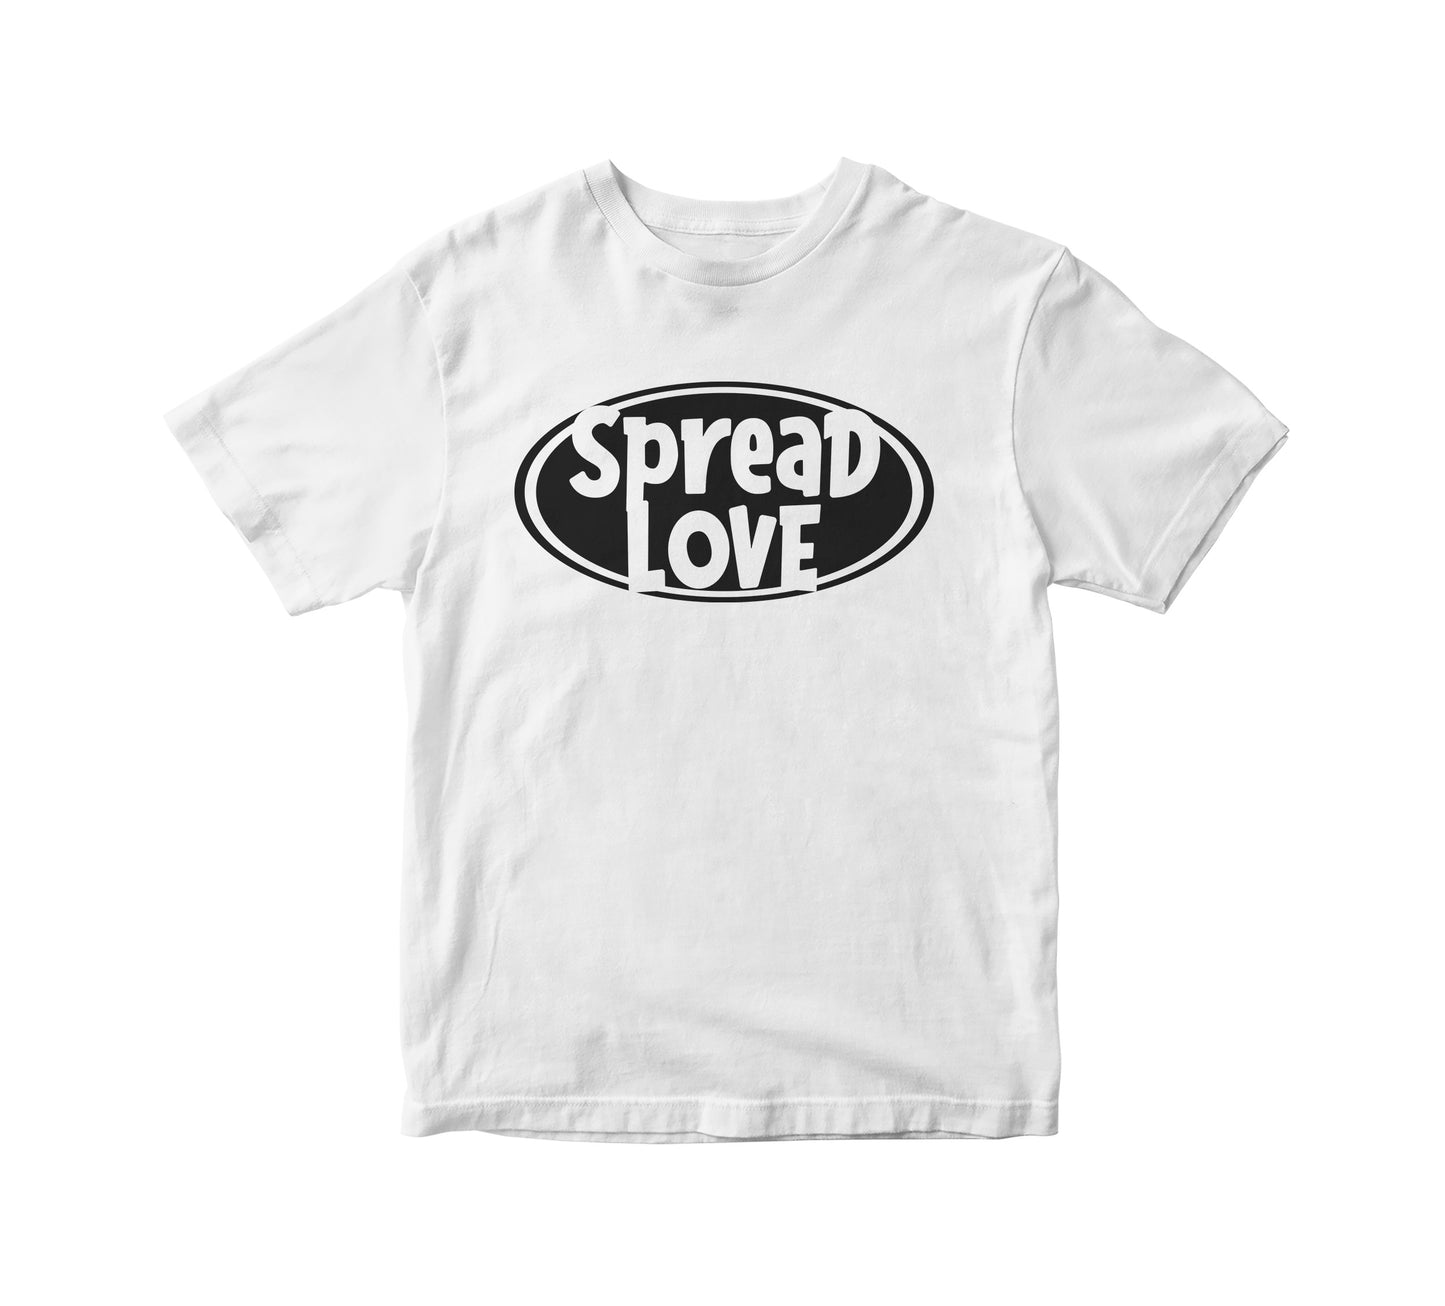 Spread Love Adult Unisex T-Shirt